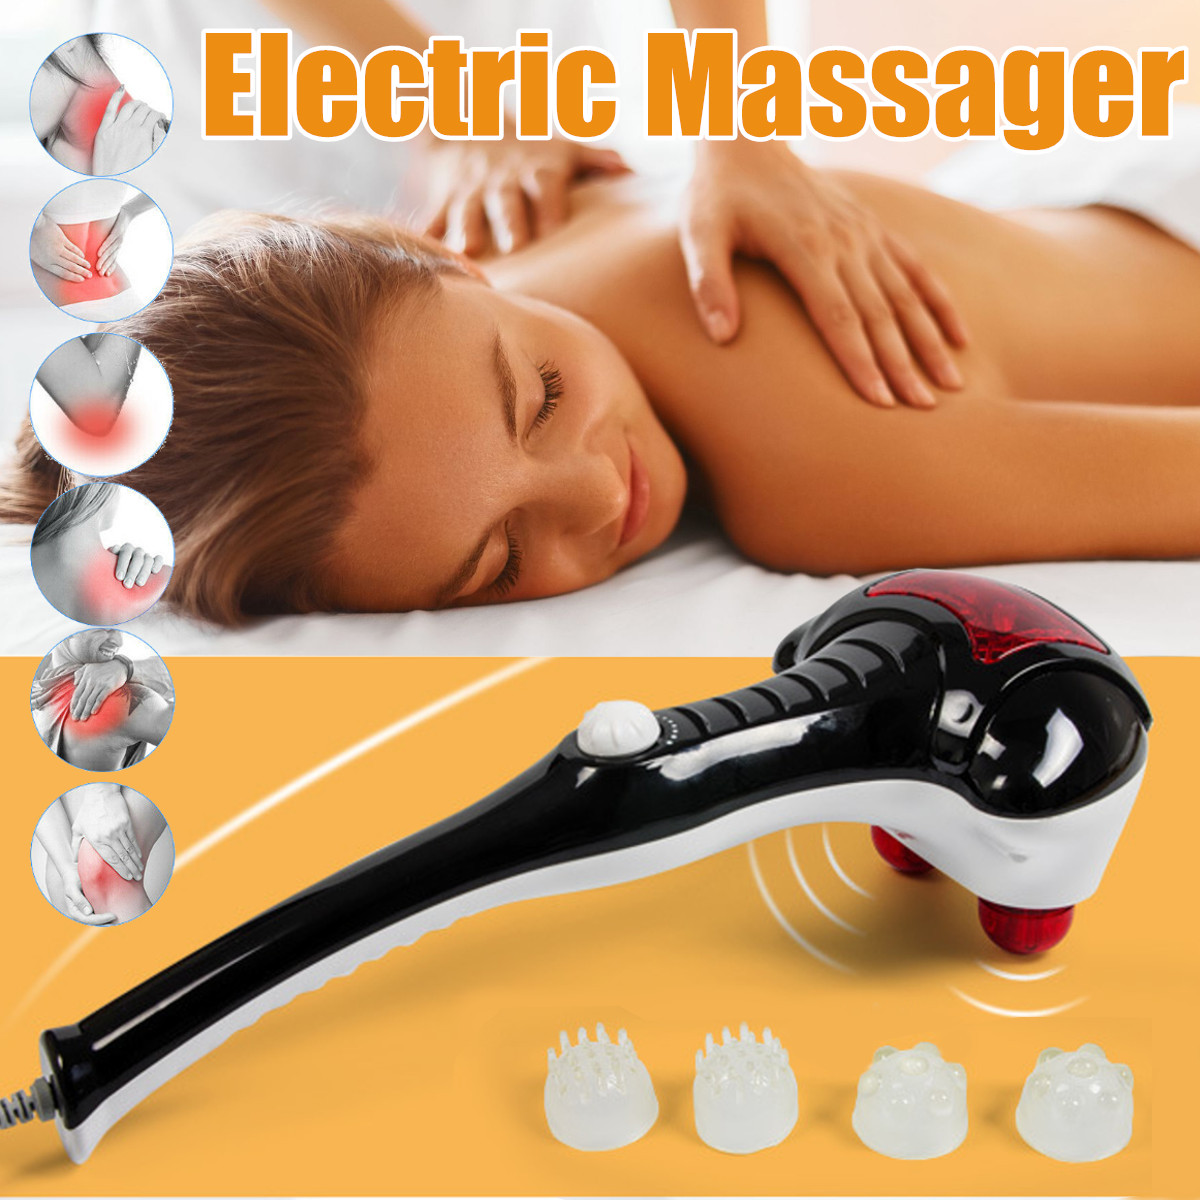 Electric-Handheld-Massager-Infrared-Heating-2-Head-Body-Neck-Back-Vibration-Massage-Hammer-1709977-1